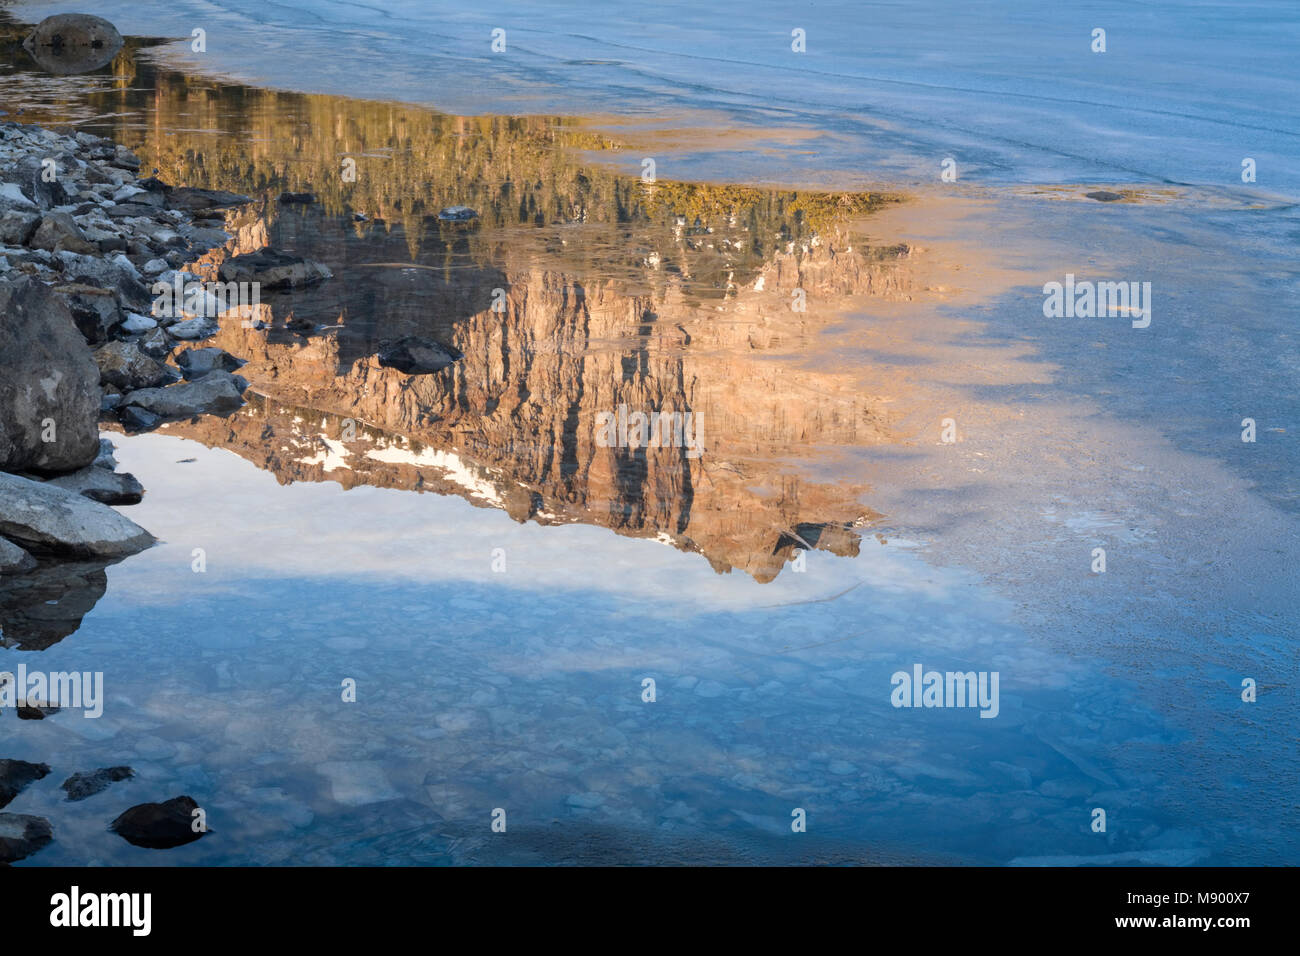 Thunder Mountain reflecting in the water of a partially frozen Silver Lake in Kit Carson, Eldorado National Forest, California, USA. Stock Photo